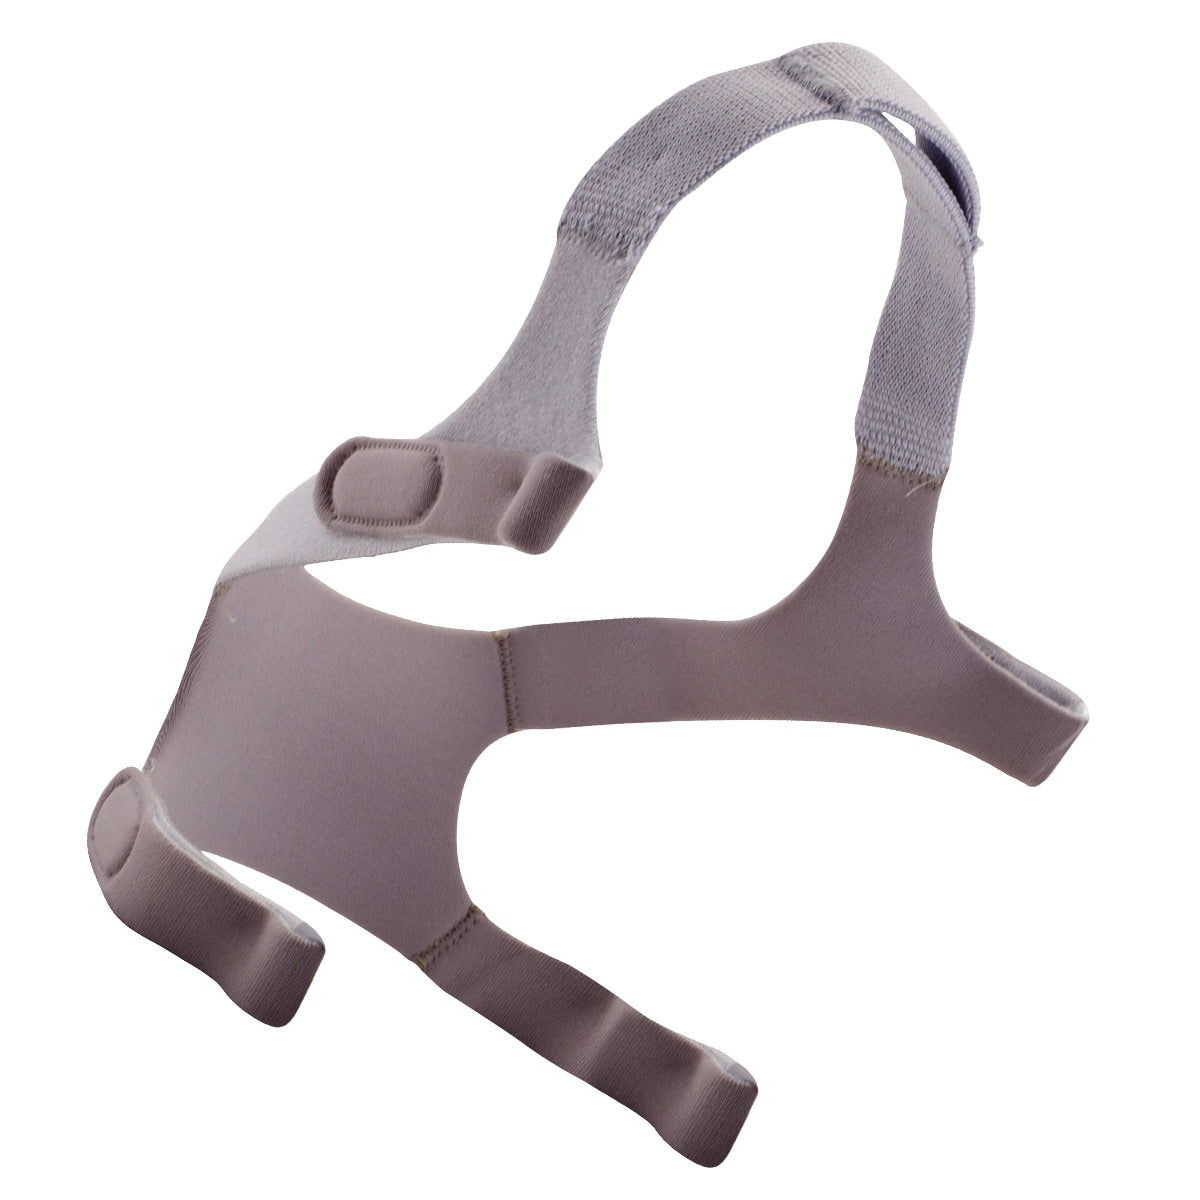 Headgear for Wisp CPAP/BiPAP Masks